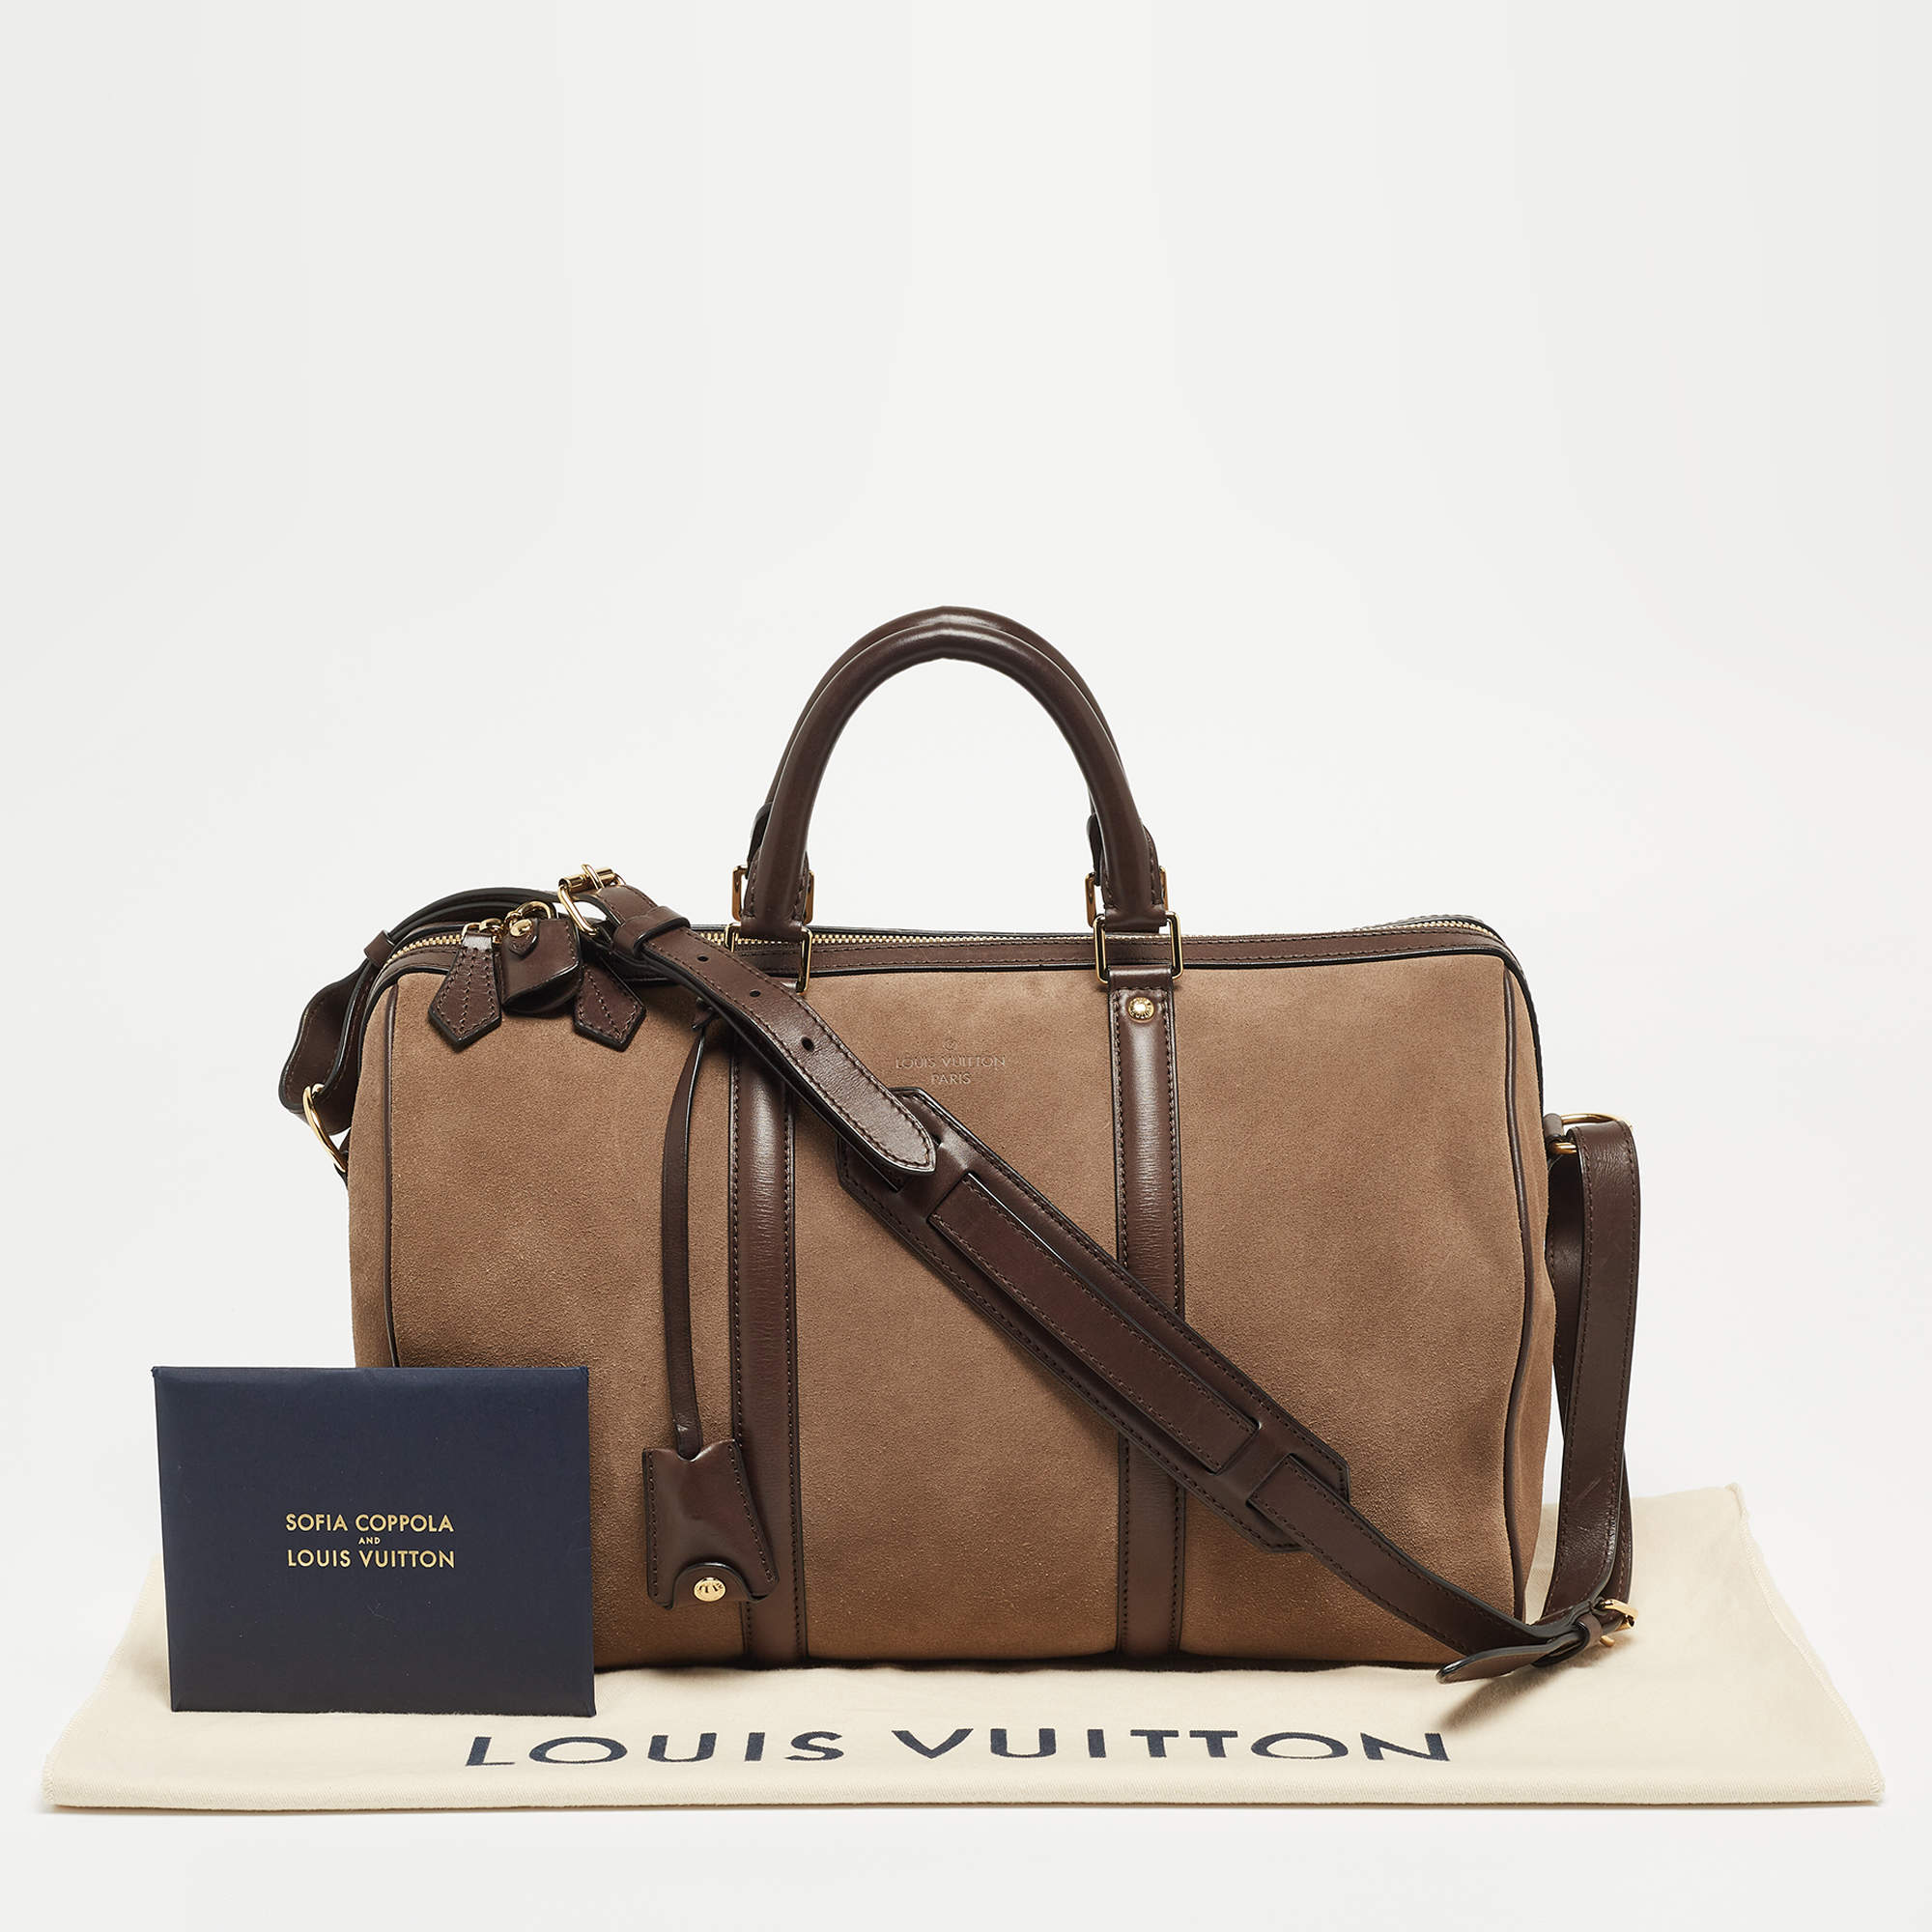 LOUIS VUITTON Sofia Coppola Monogram Clutch Bag